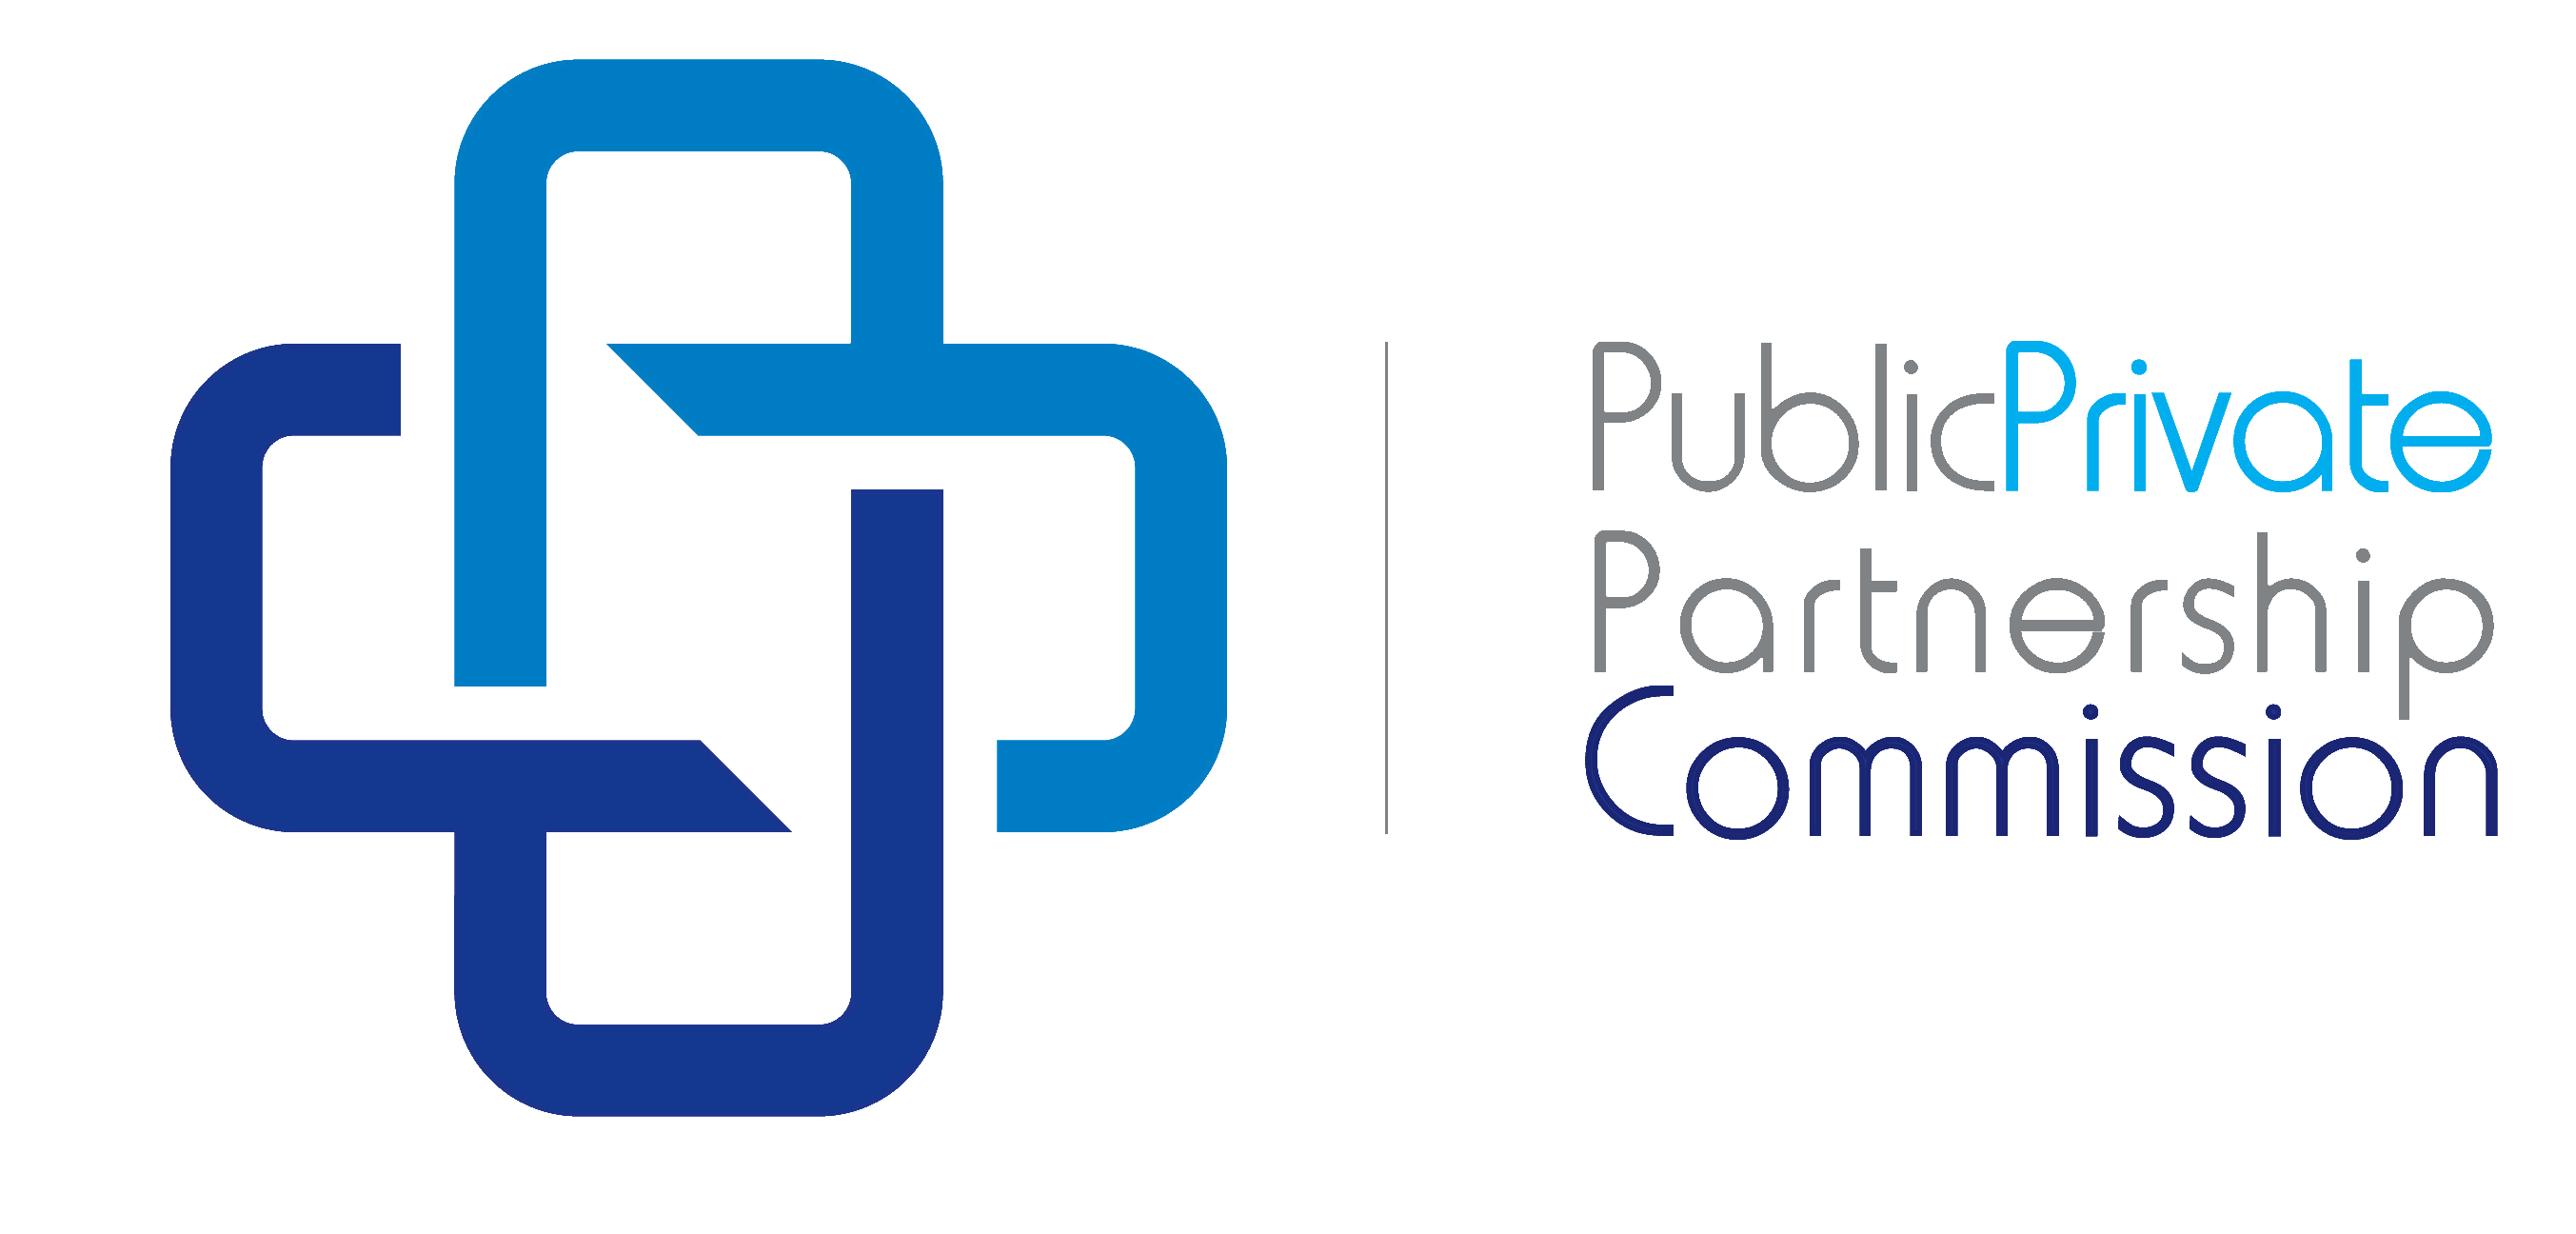 Public Private Partnership Commission